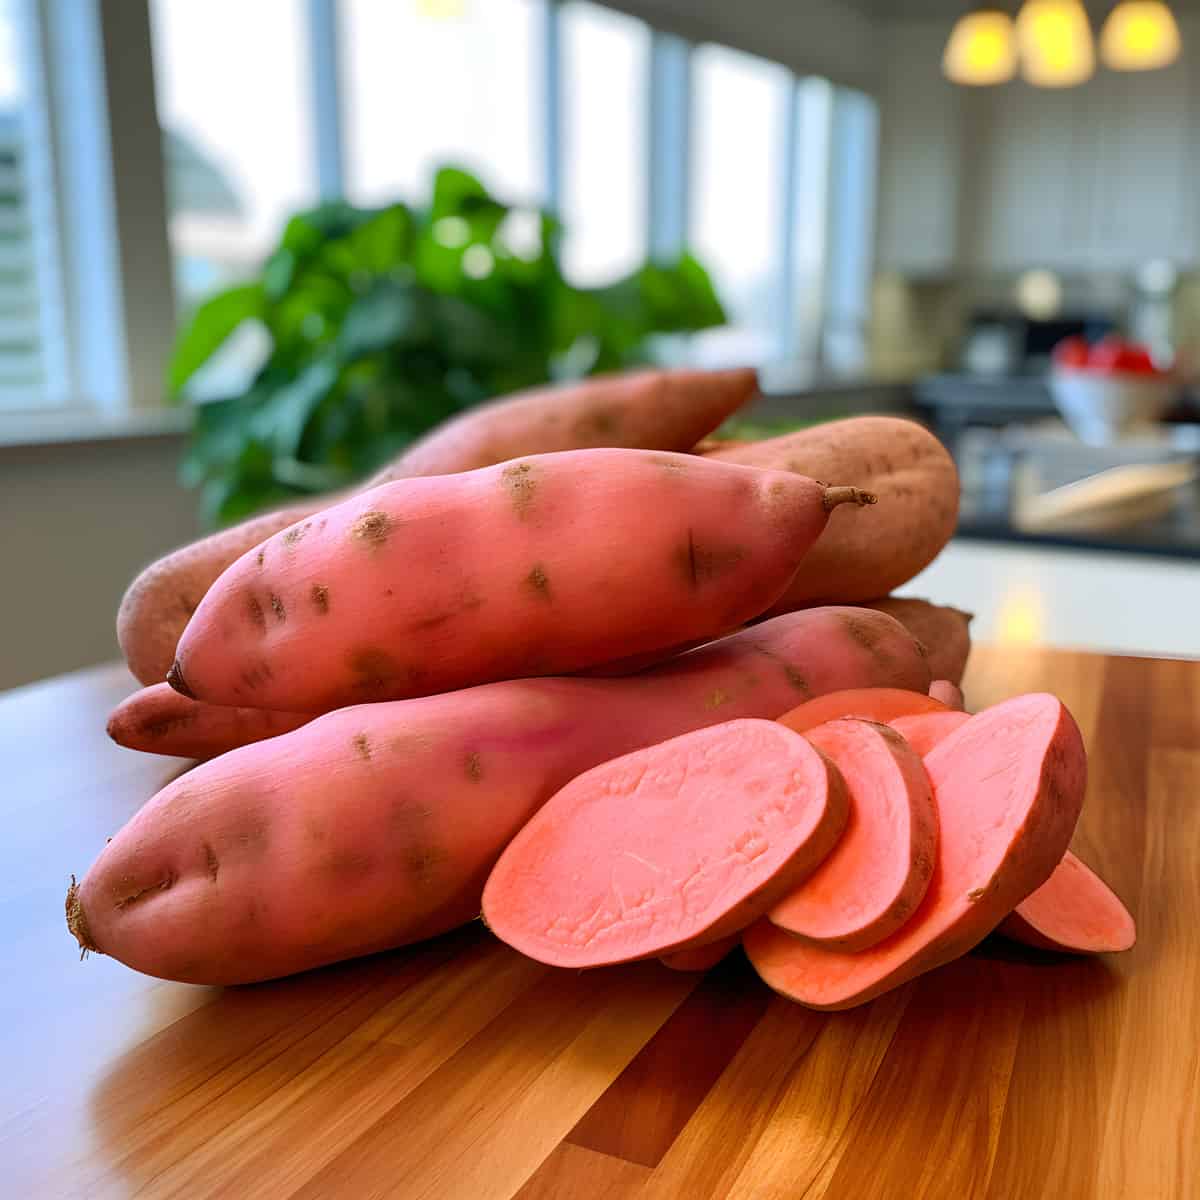 Carolina Nugget Sweet Potatoes on a kitchen counter